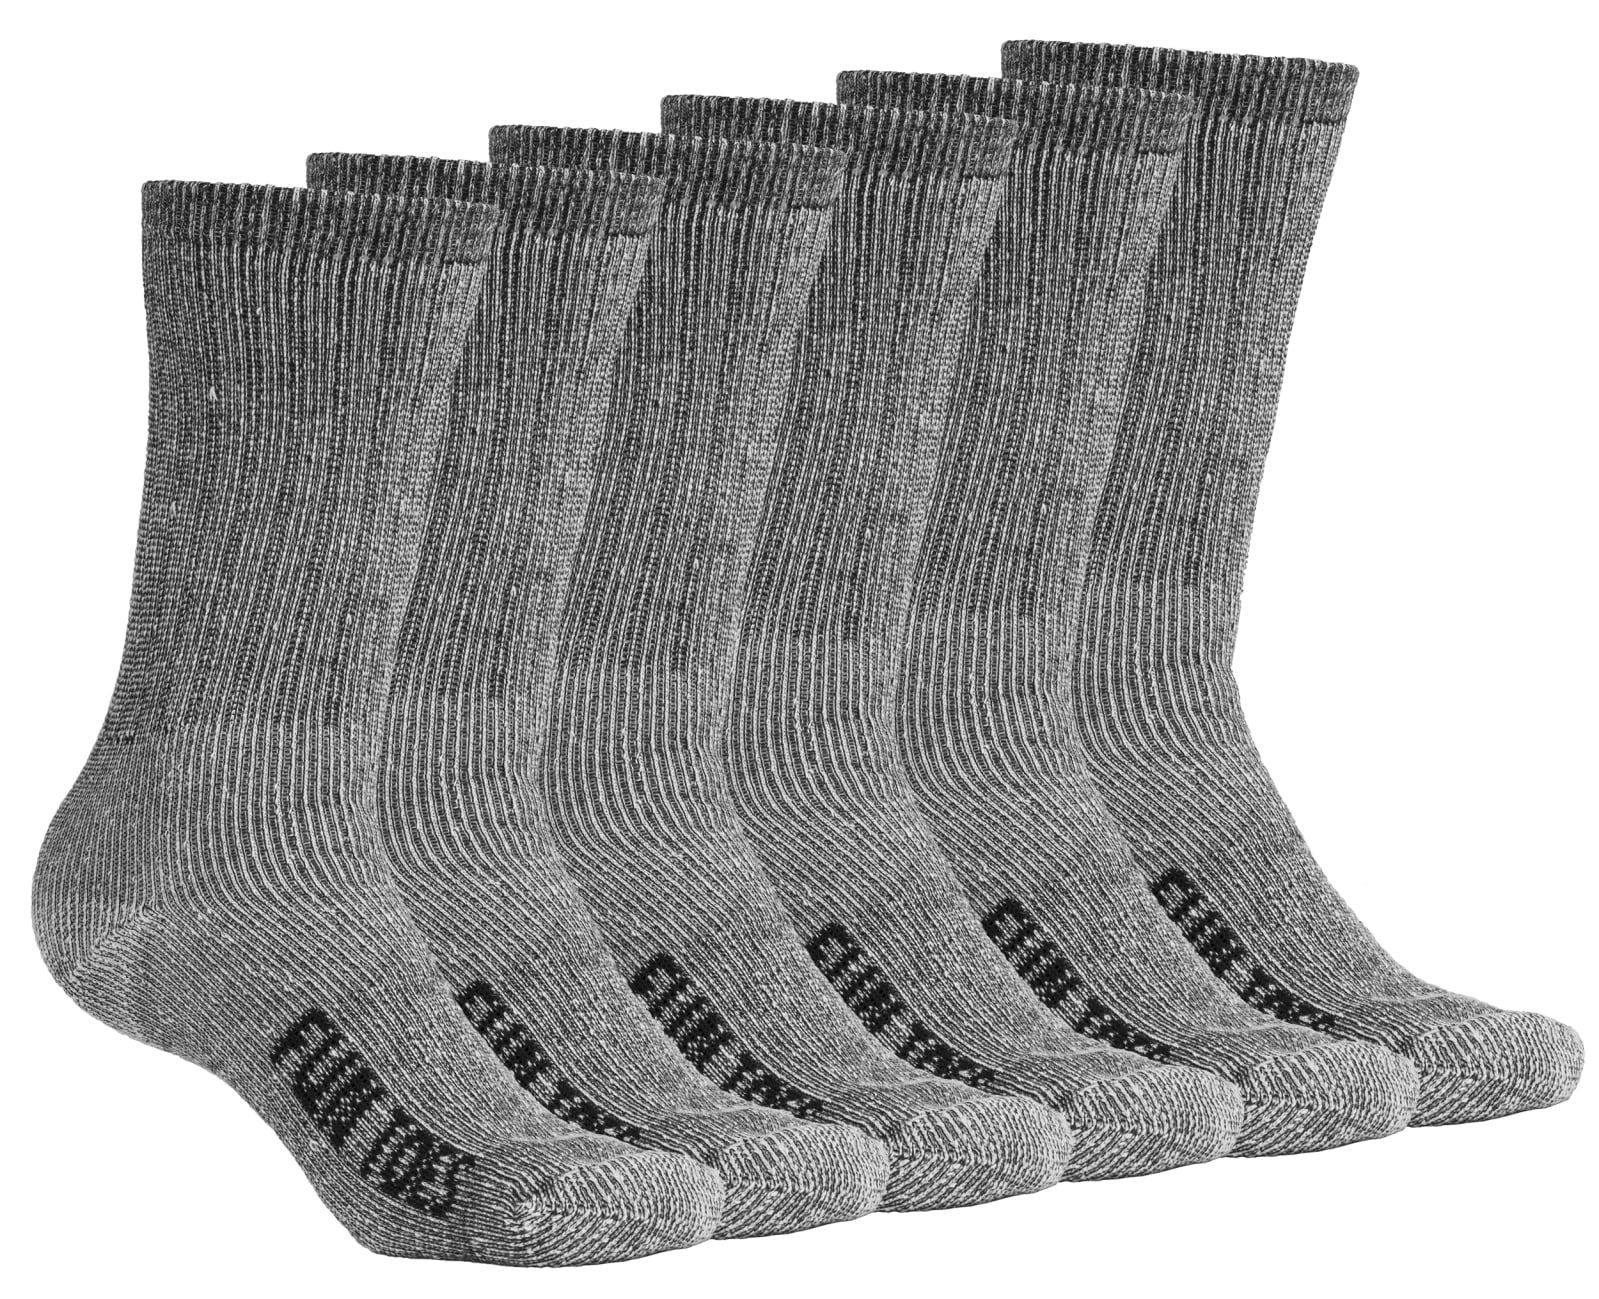 Mens Thin Warm Wool Socks,Lixia Winter Breathable Crew Dress Trouser Socks 2/4/6 Pairs Pack 